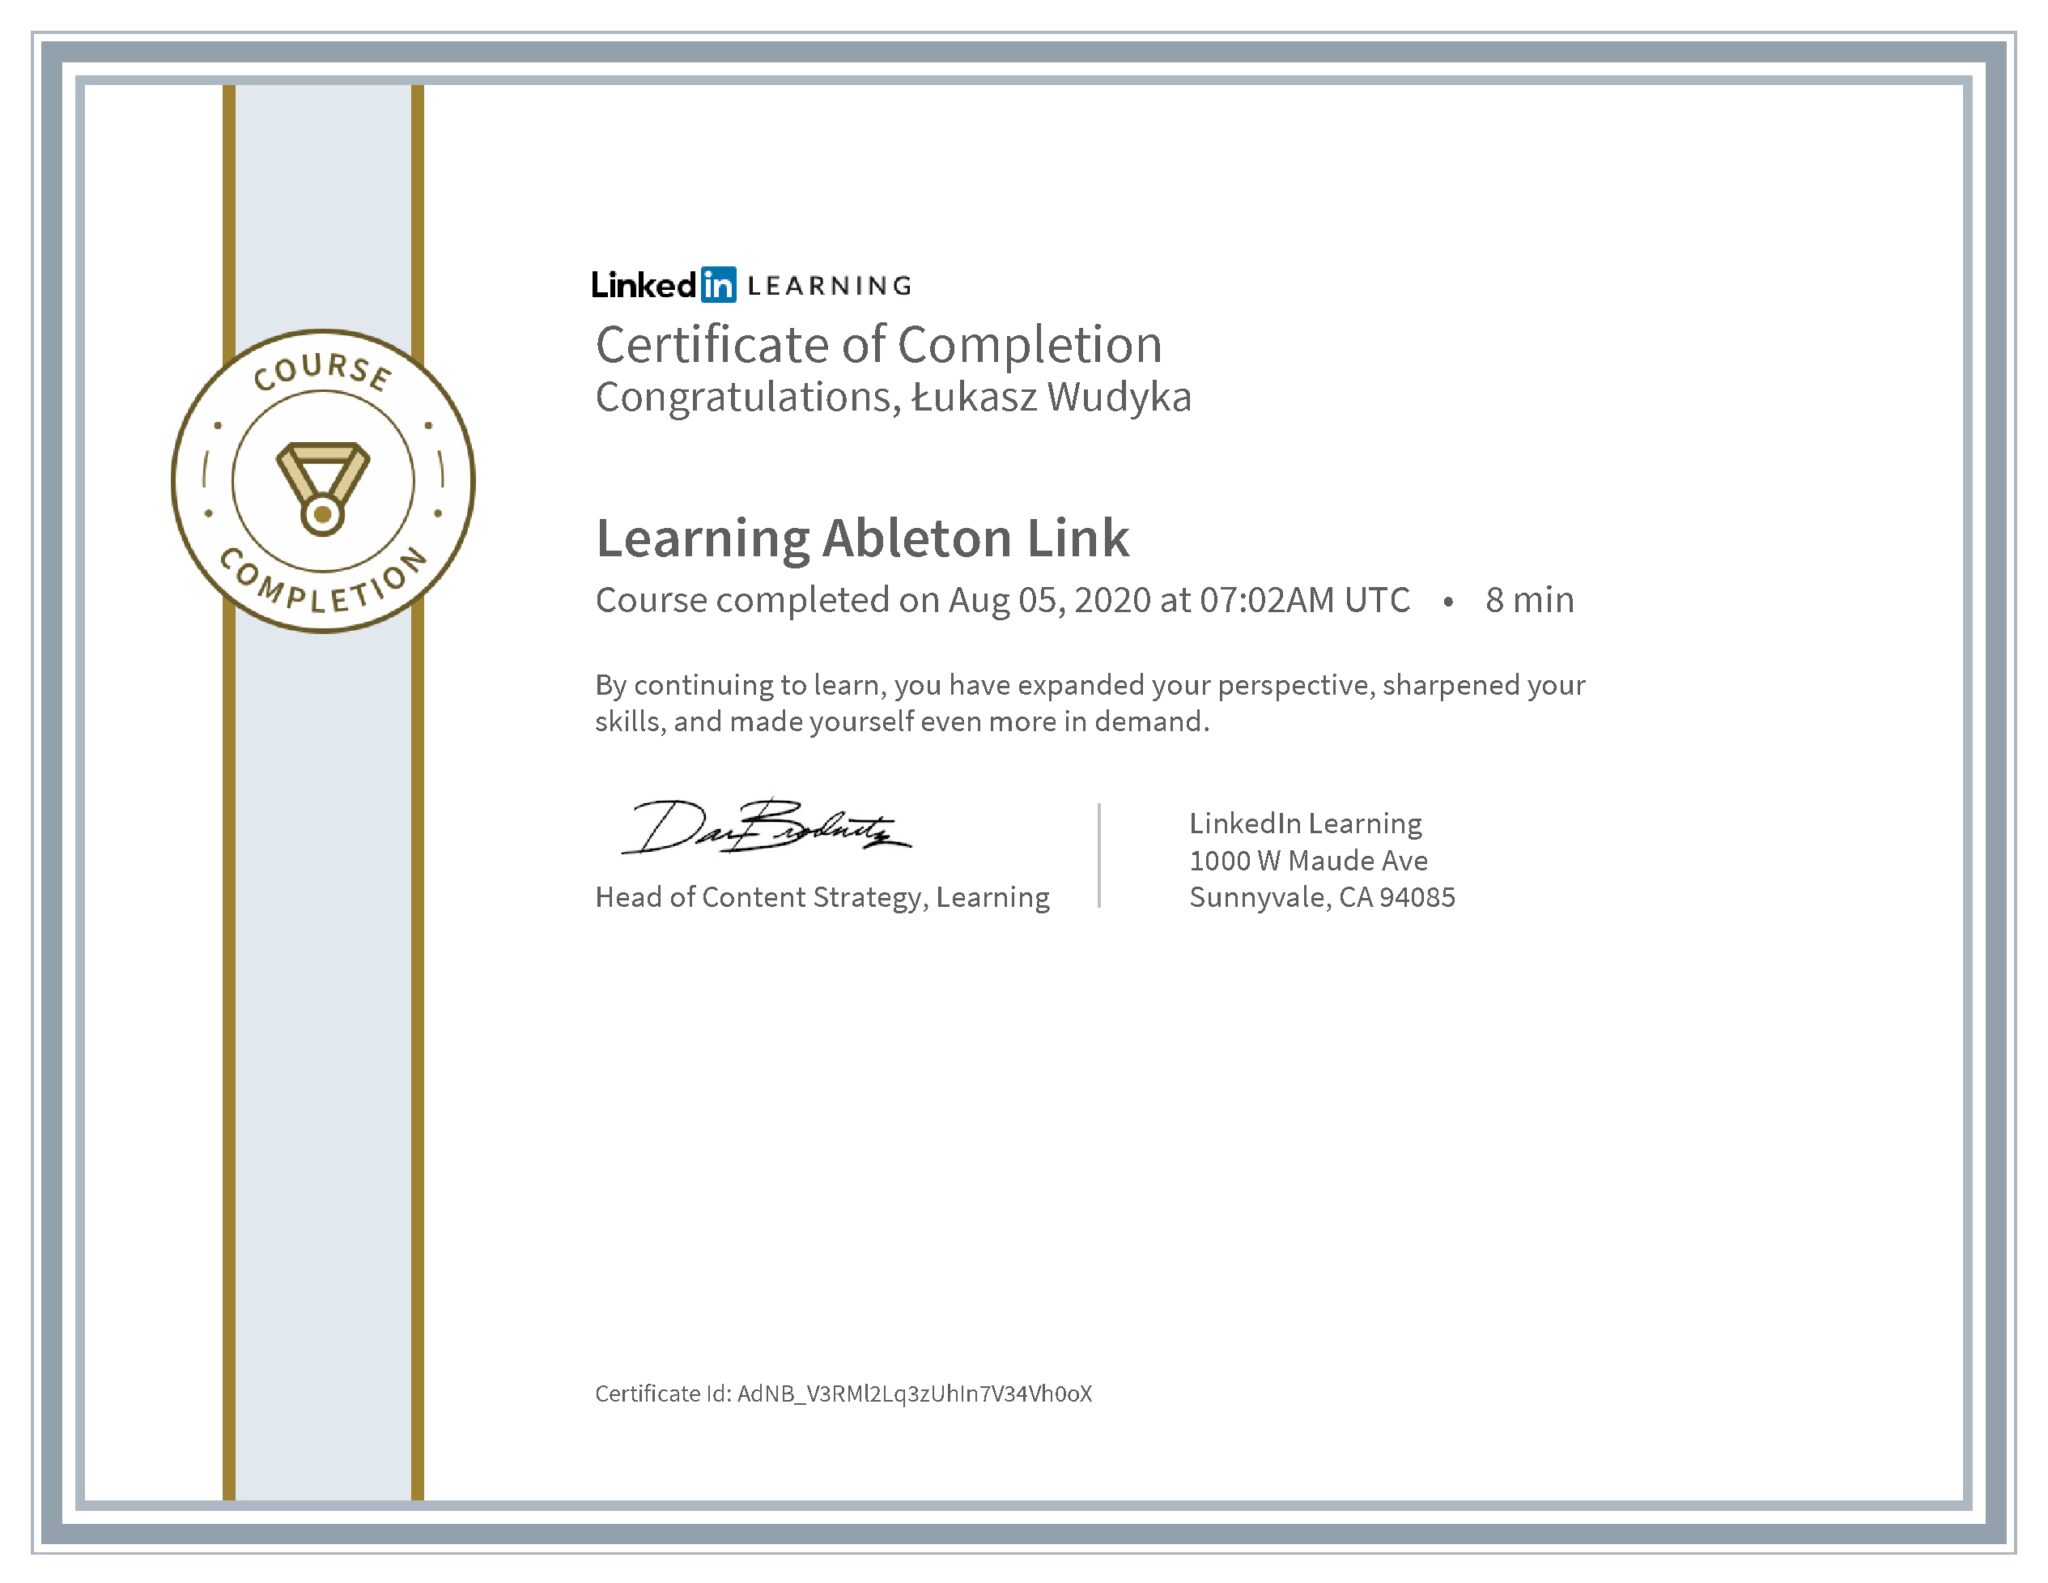 Łukasz Wudyka certyfikat LinkedIn Learning Ableton Link